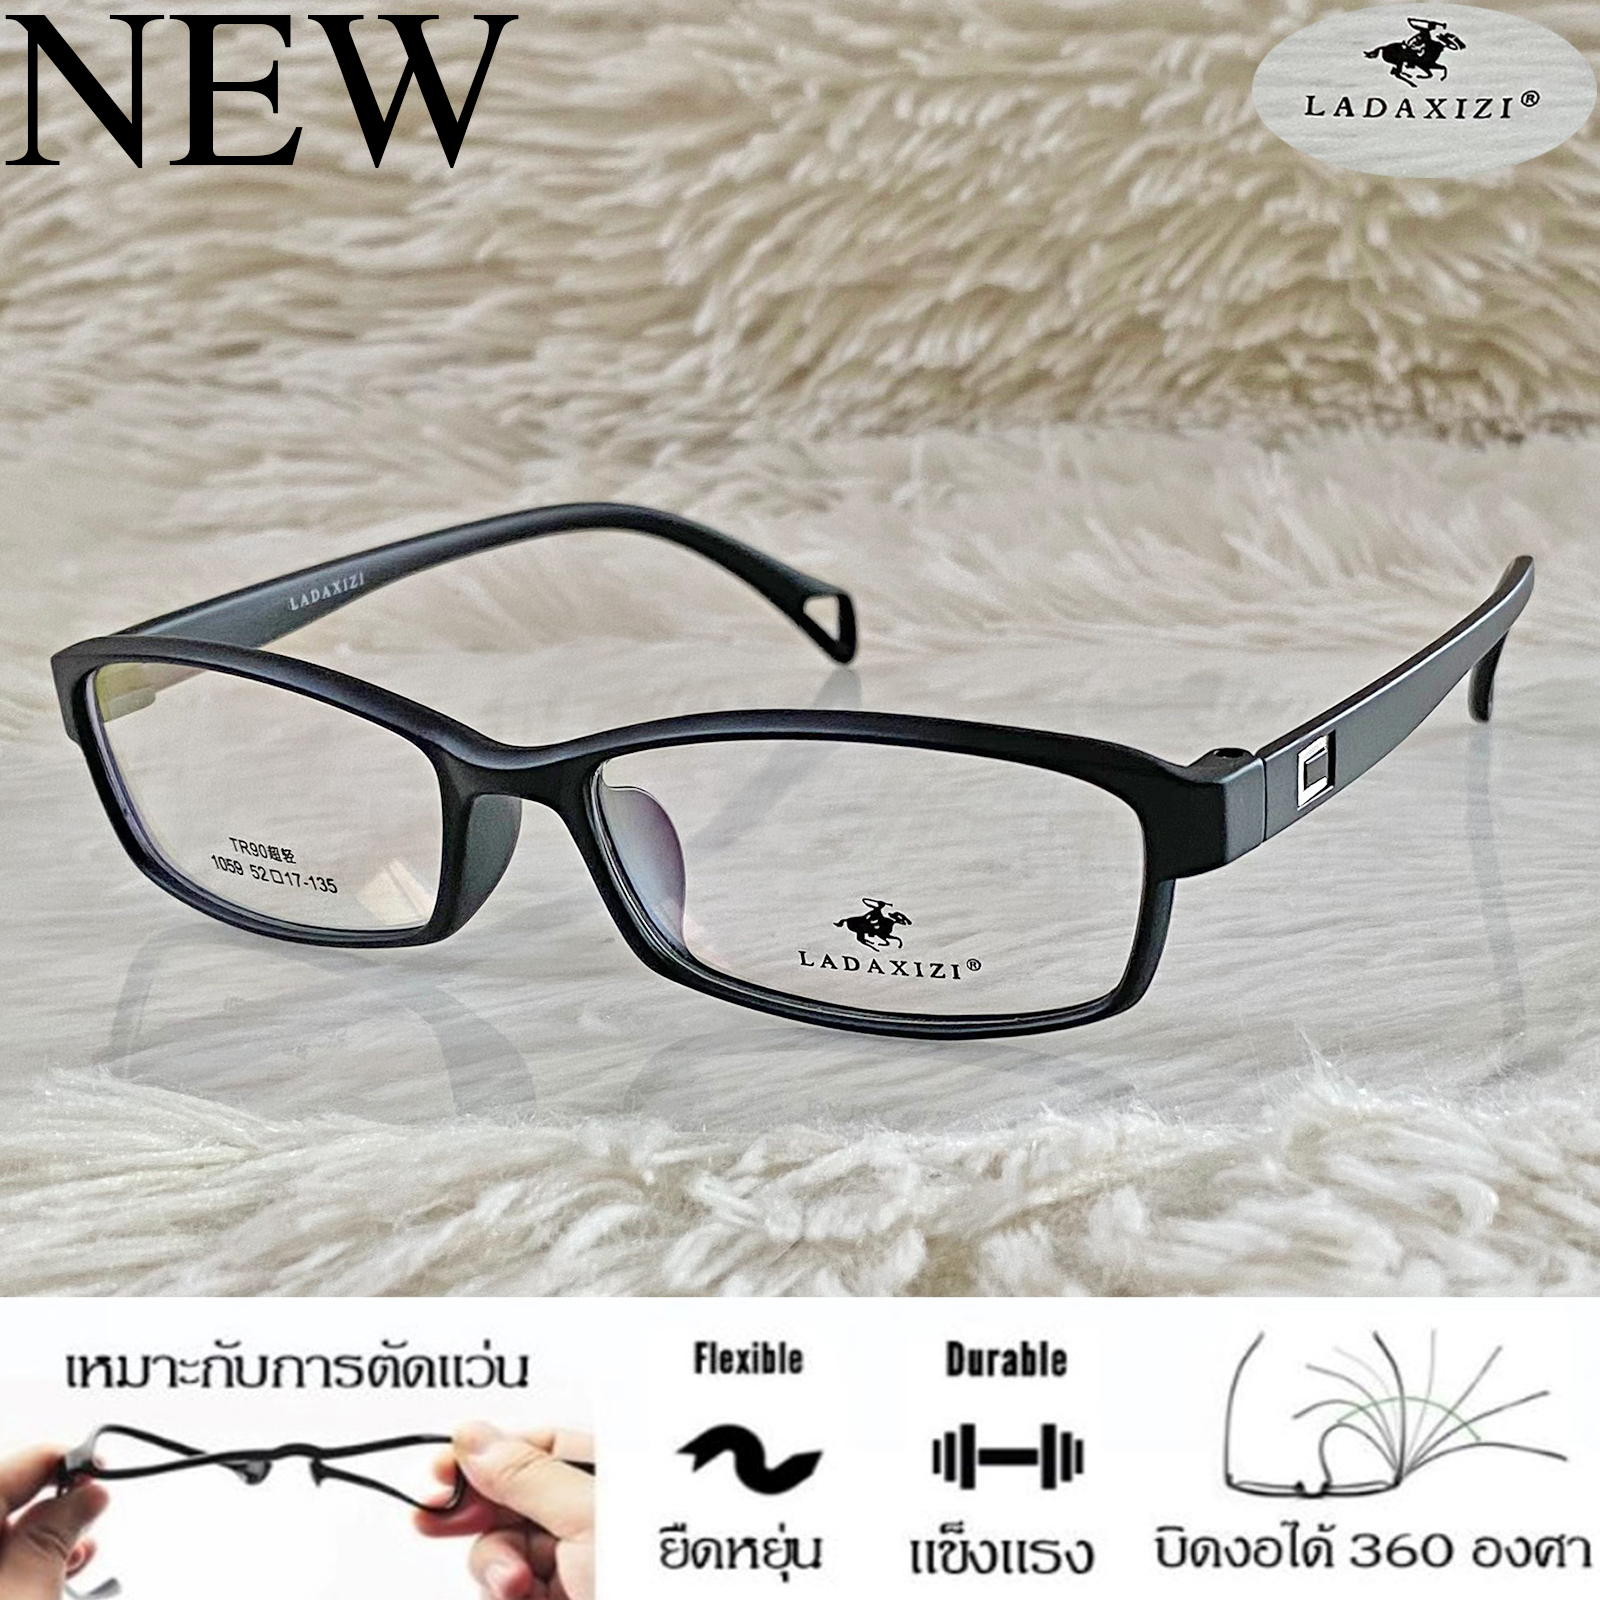 TR 90 กรอบแว่นตา สำหรับตัดเลนส์ แว่นตา Fashion ชาย-หญิง รุ่น LADAXIZI 10599 กรอบเต็ม ทรงเหลี่ยม ขาข้อต่อ ทนความร้อนสูง รับตัดเลนส์ ทุกชนิด